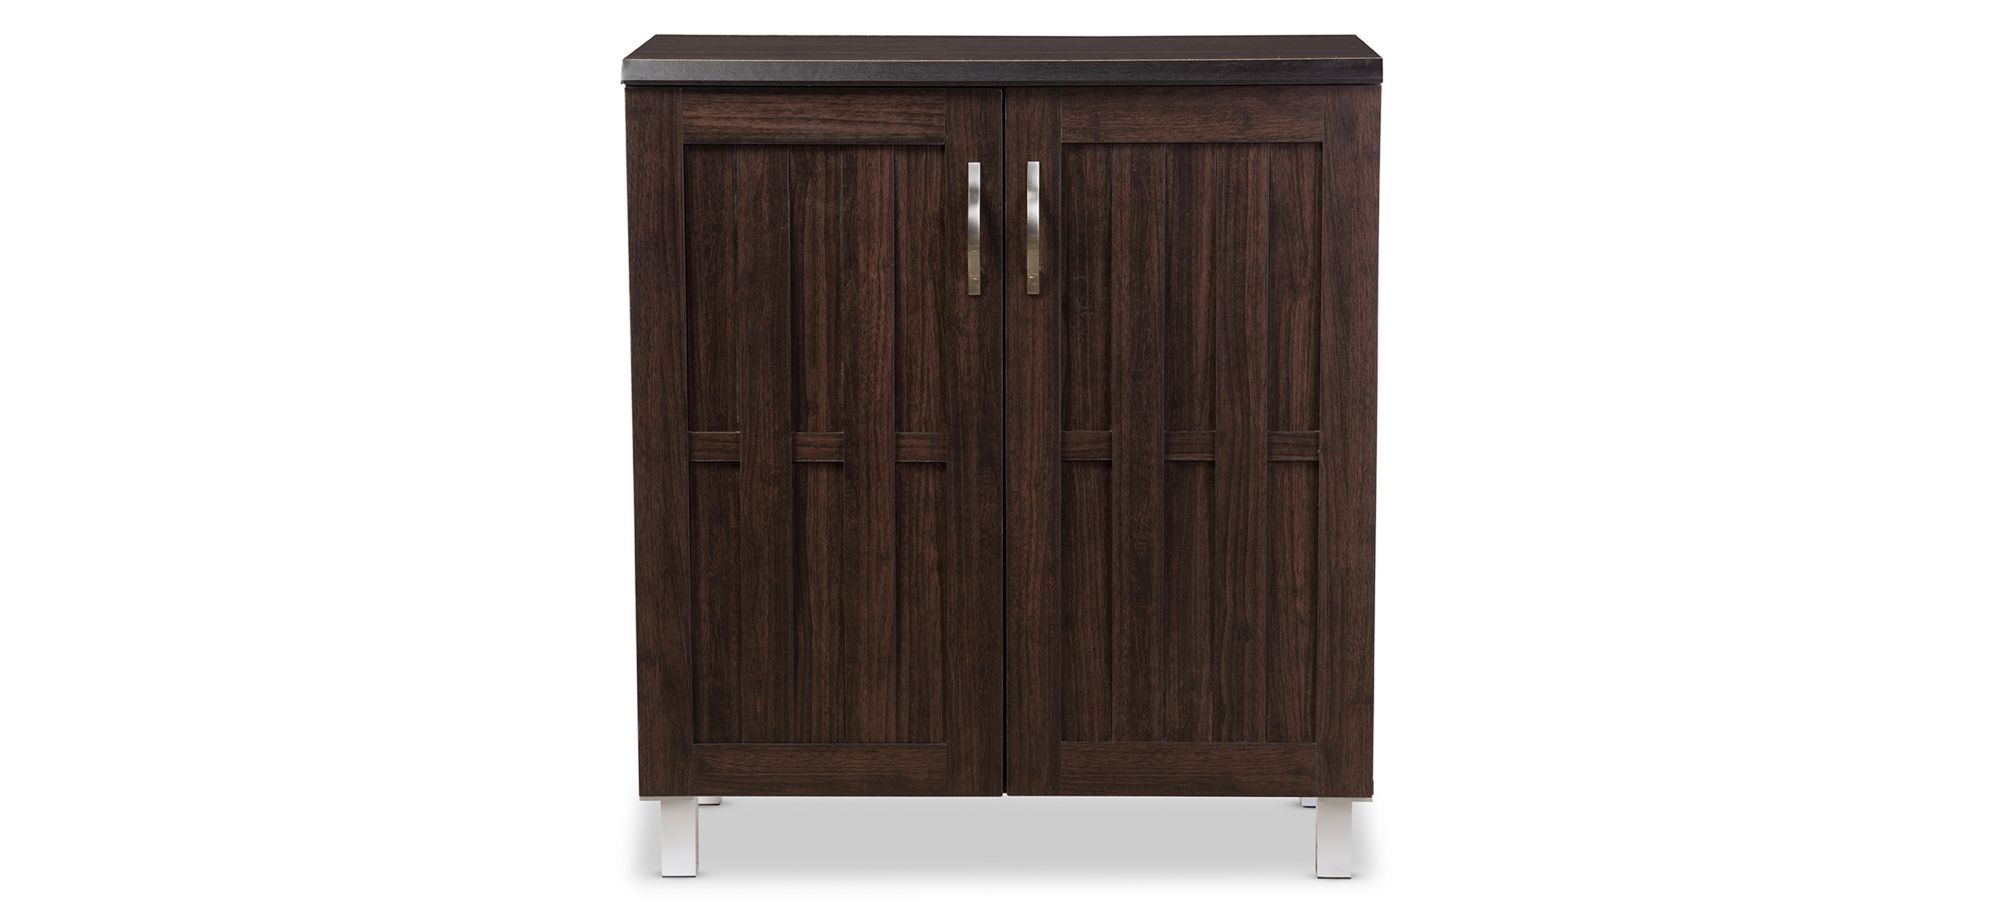 Exce Sideboard Storage Cabinet in Dark Brown by Wholesale Interiors